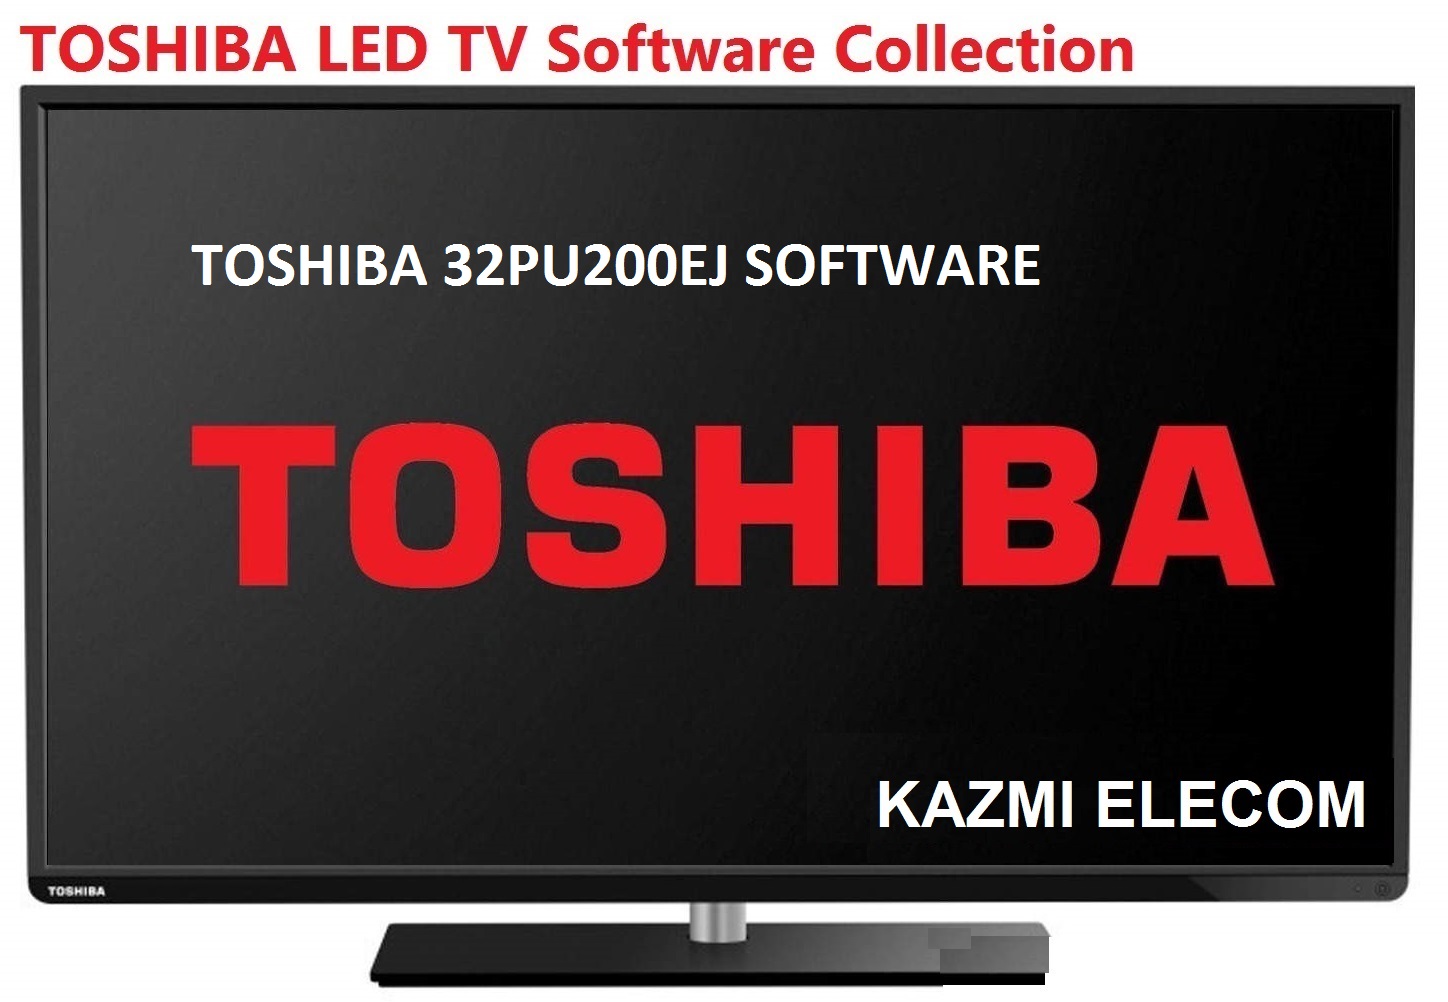 Toshiba 32Pu200Ej